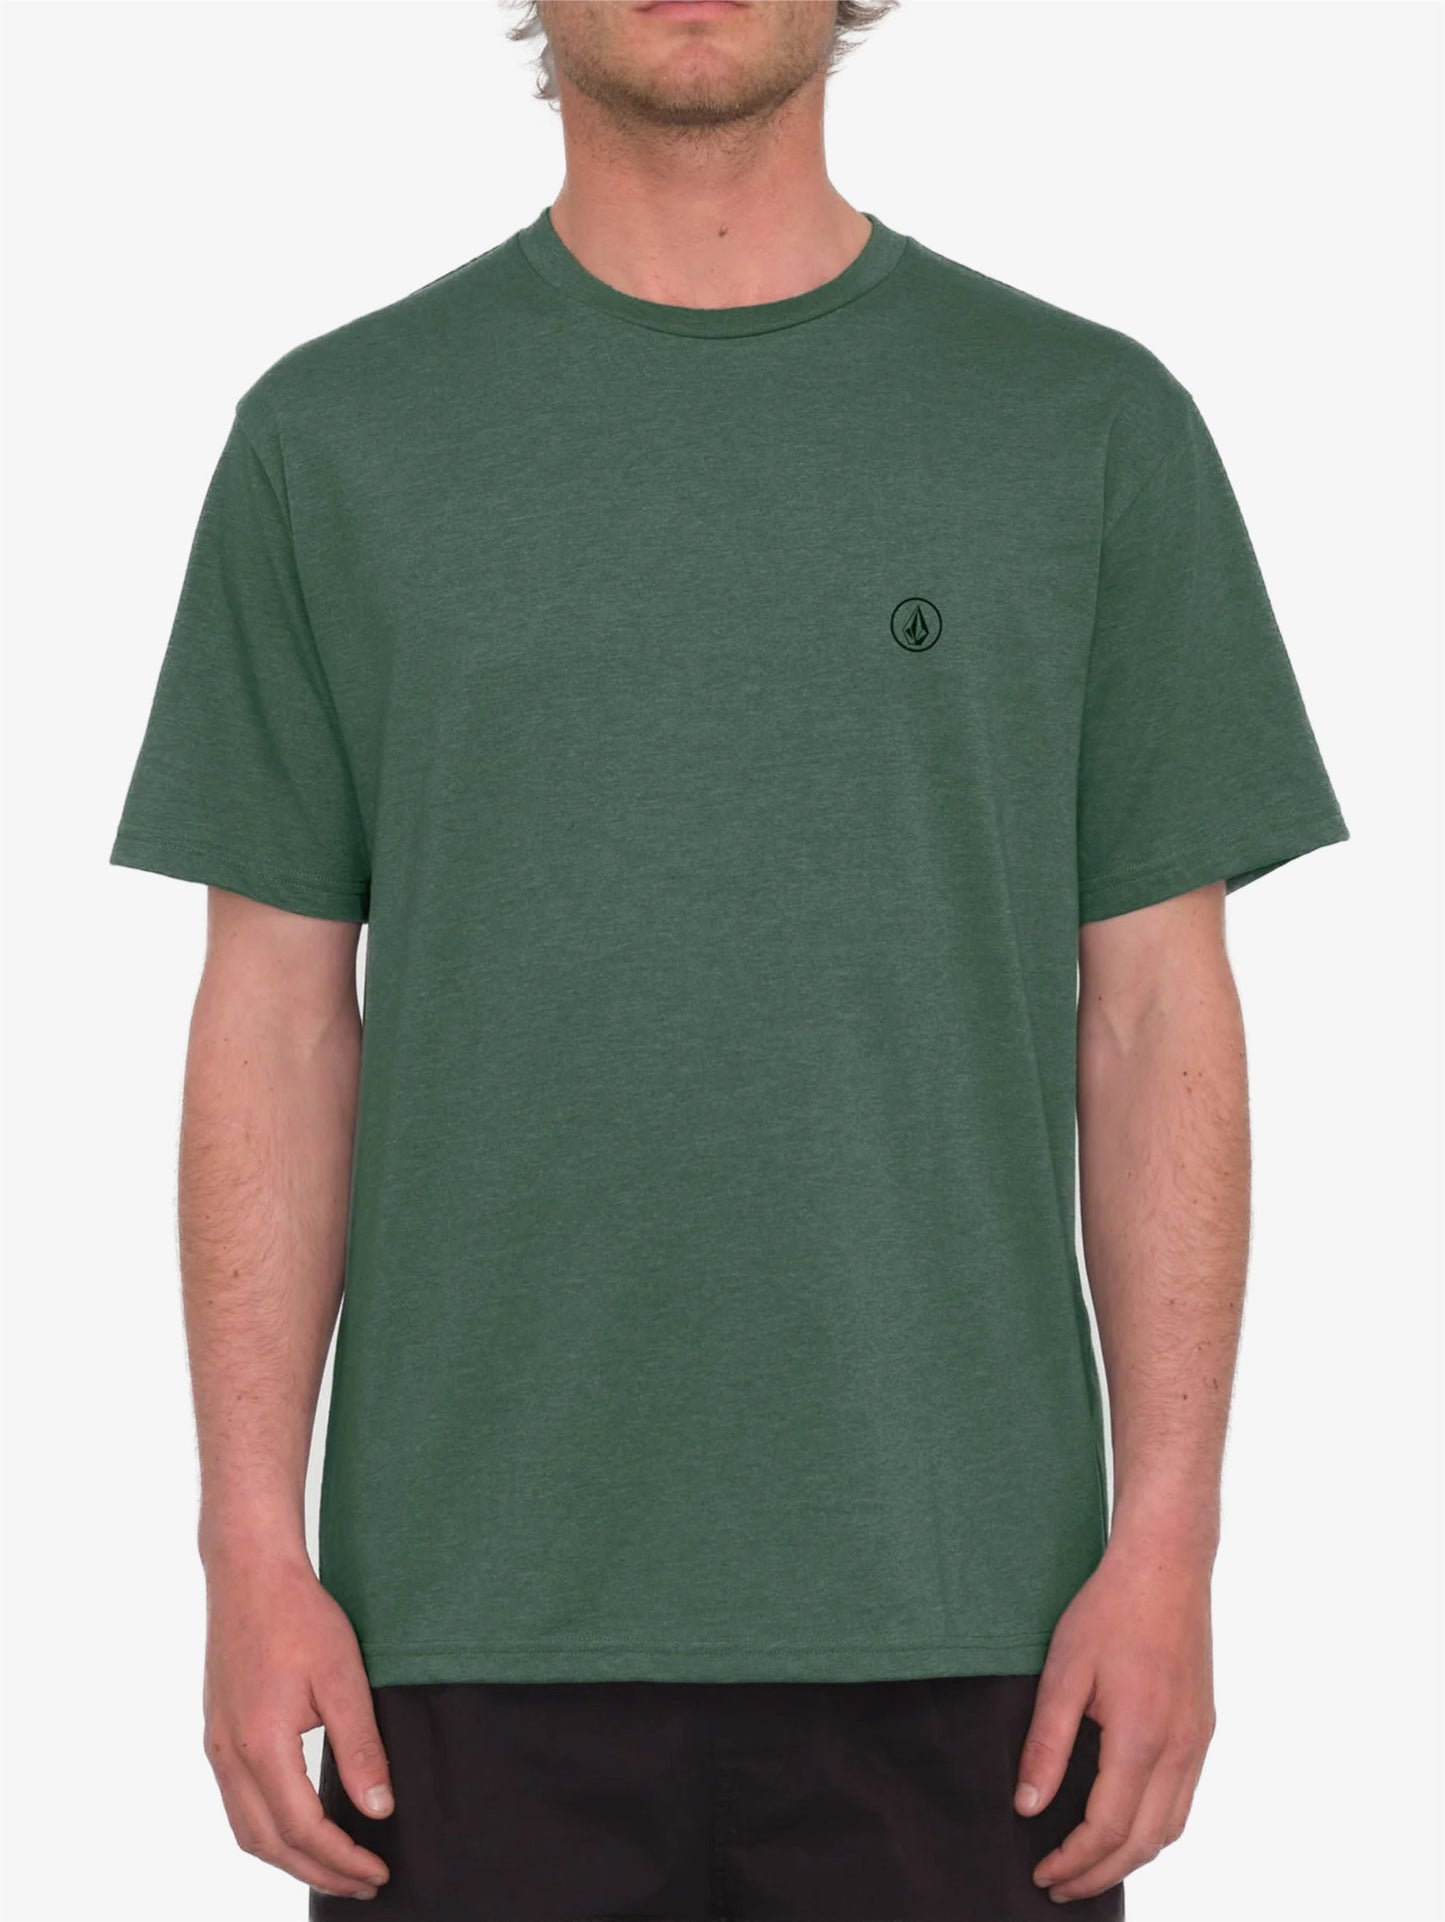 Circle Blanks Tee t-shirt Fir Green